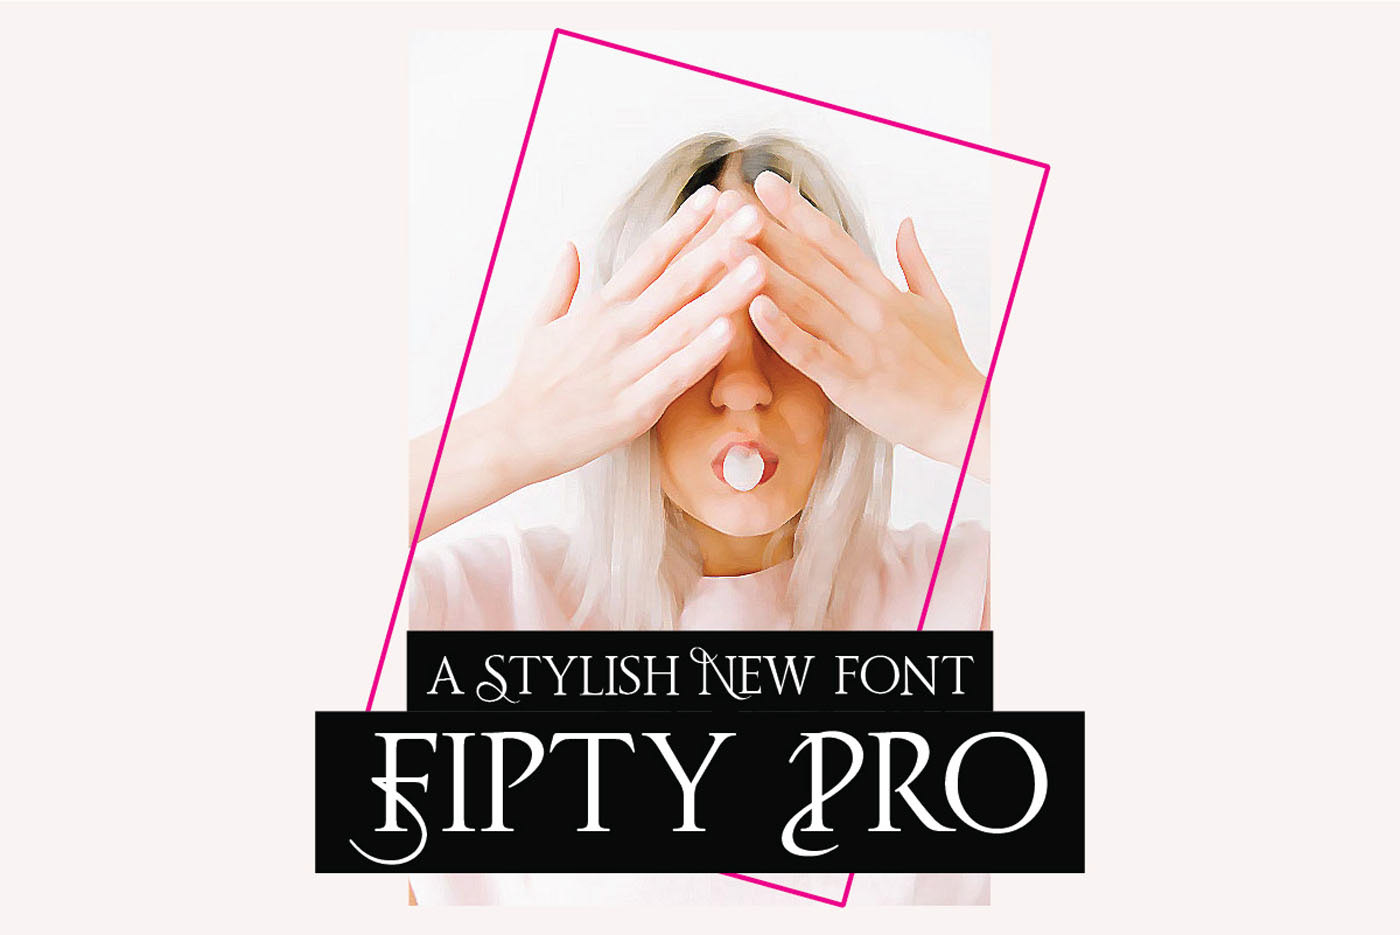 Fipty Pro Serif Font family font regular caligraphy clasic